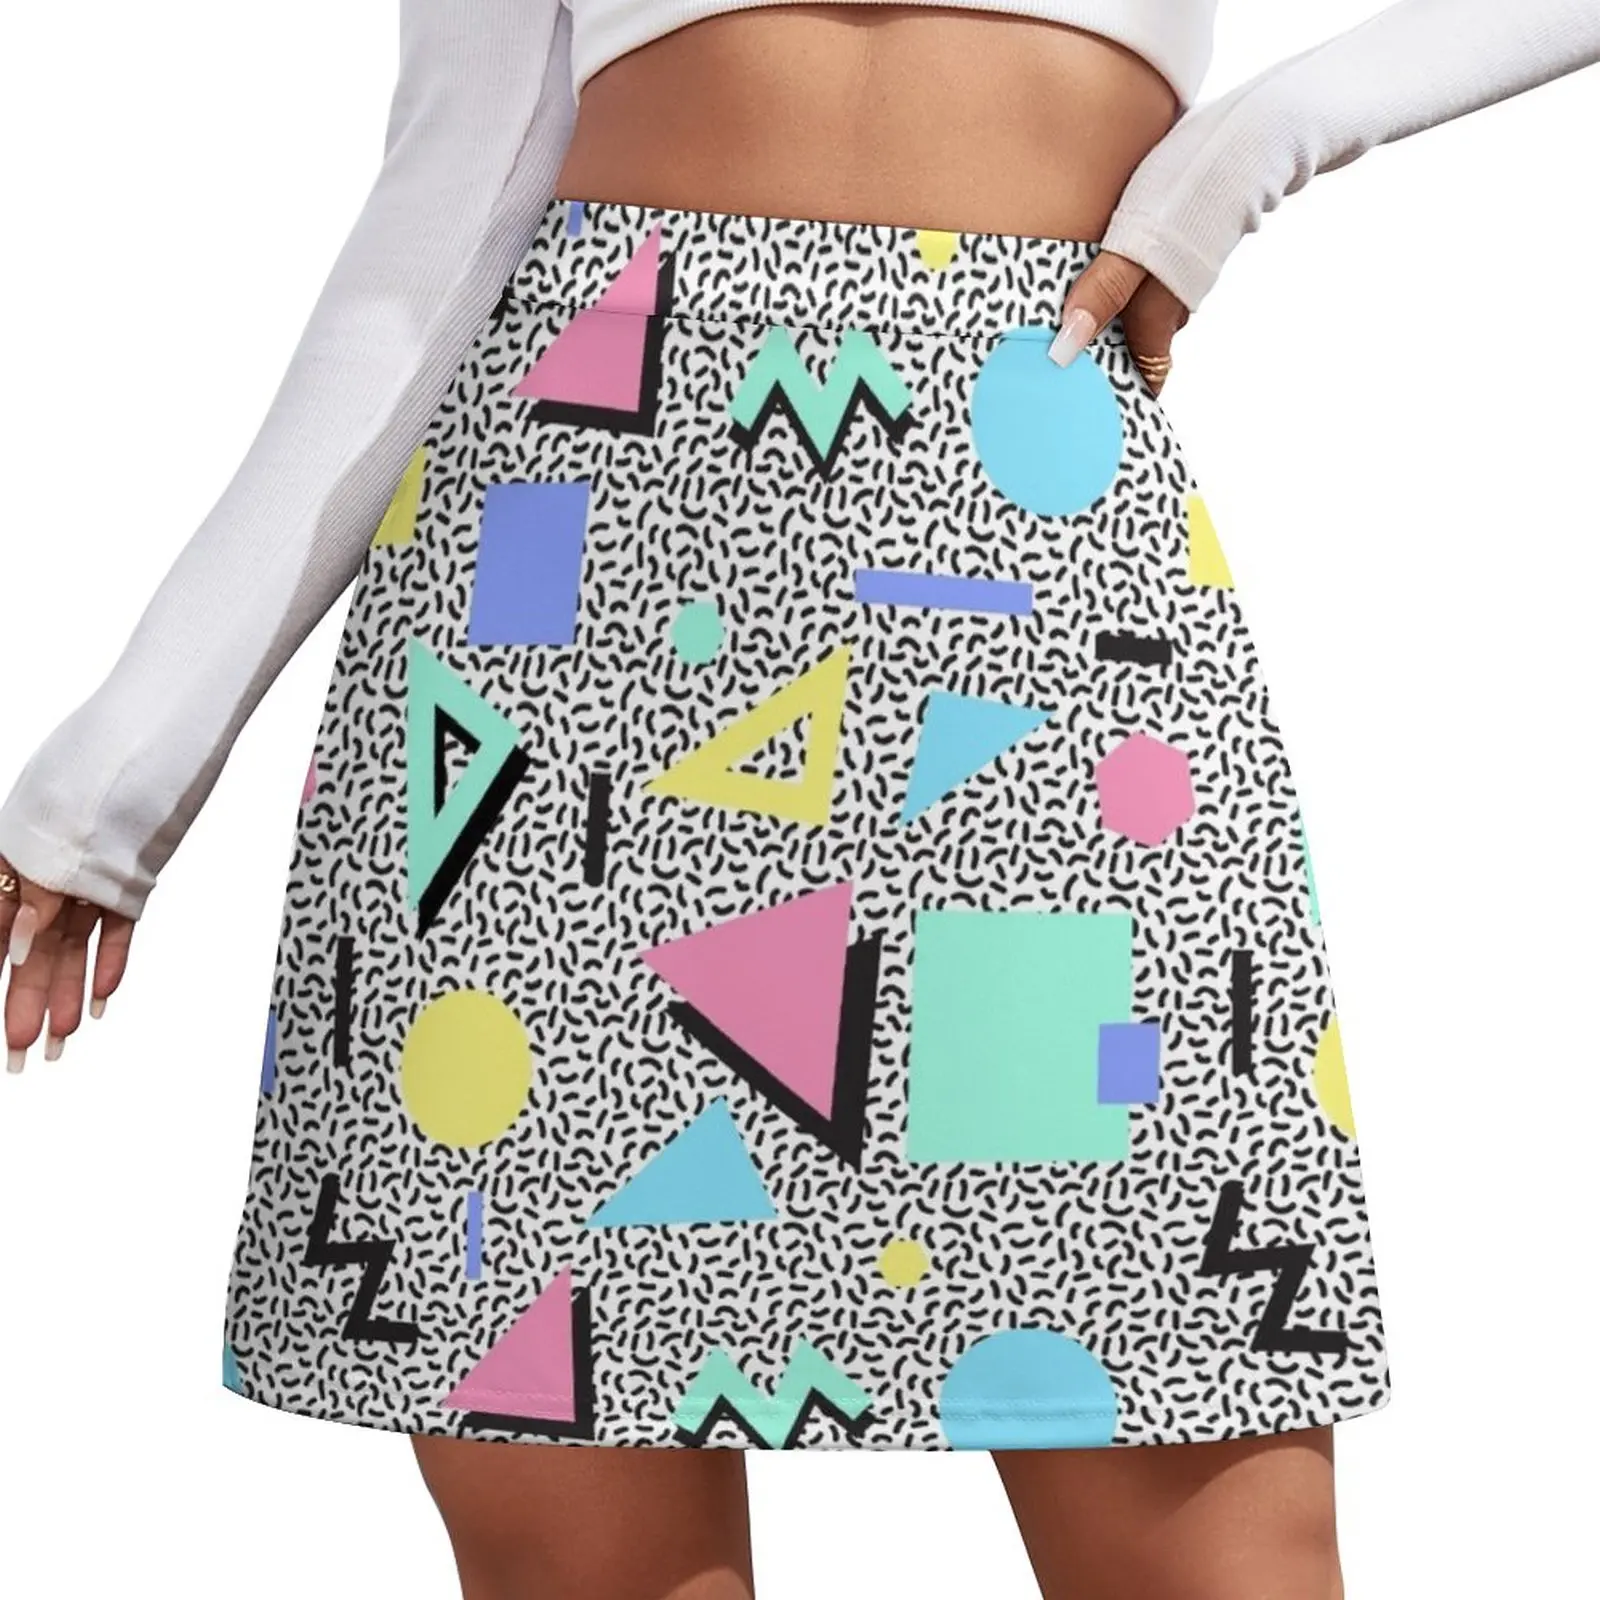 Memphis Pastel Mini Skirt midi skirt for women Woman skirts skirts for womens night club outfit